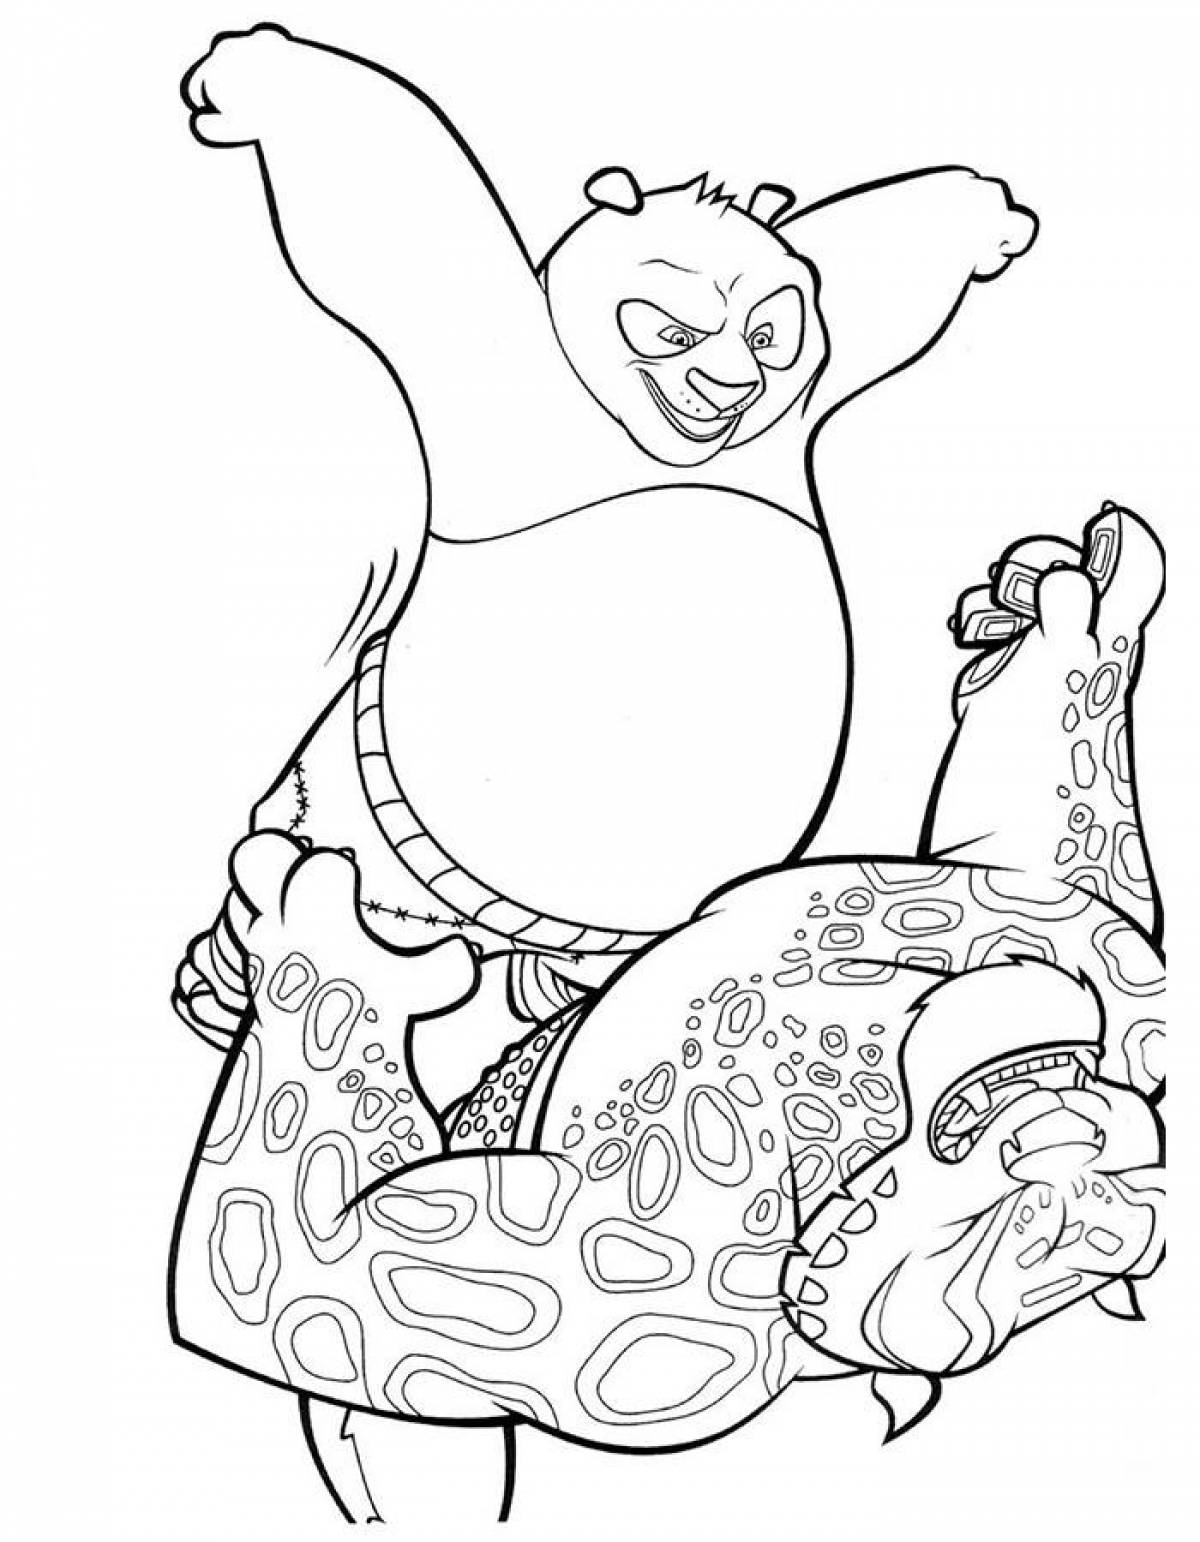 Joyful kung fu panda coloring book